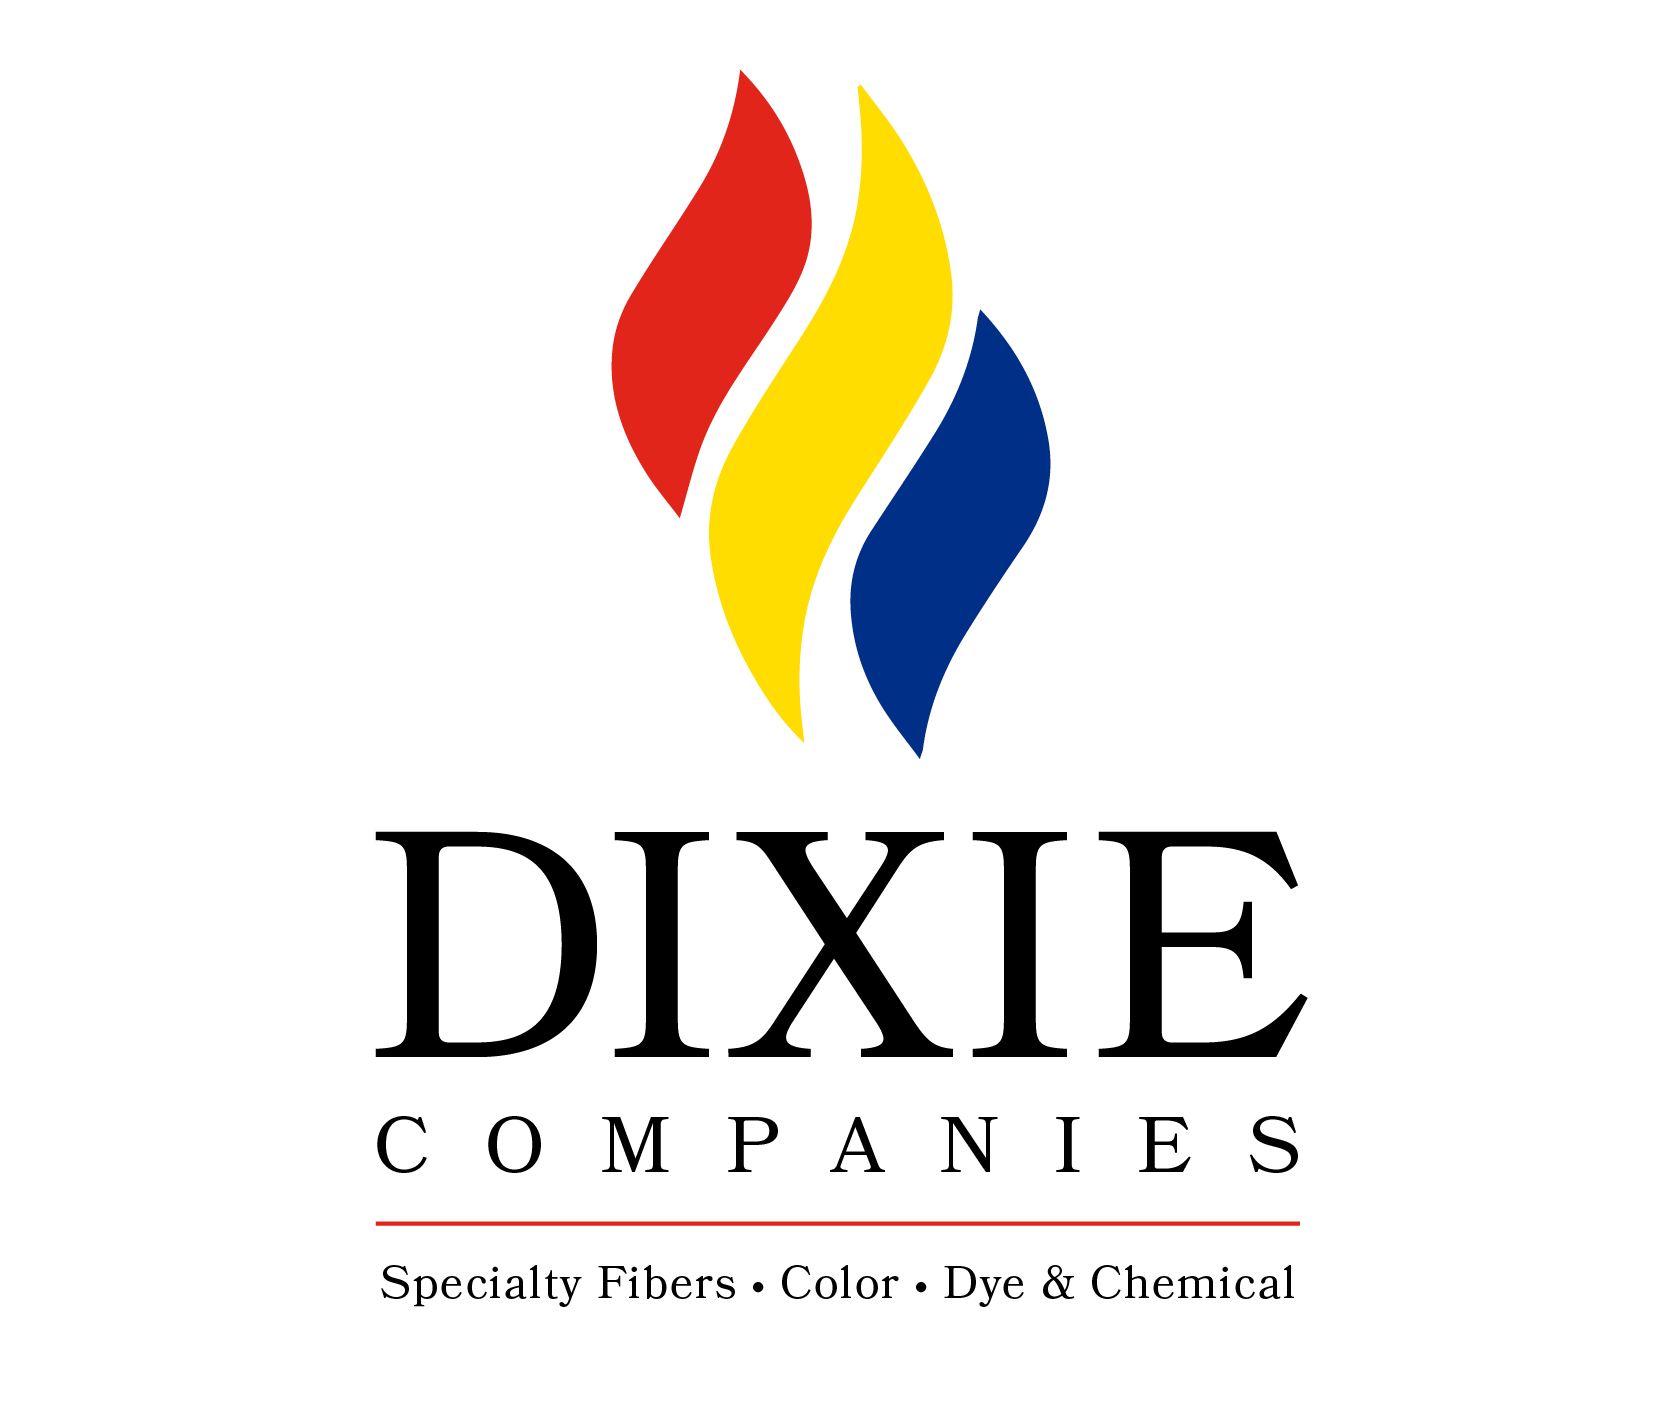 Dixie Companies